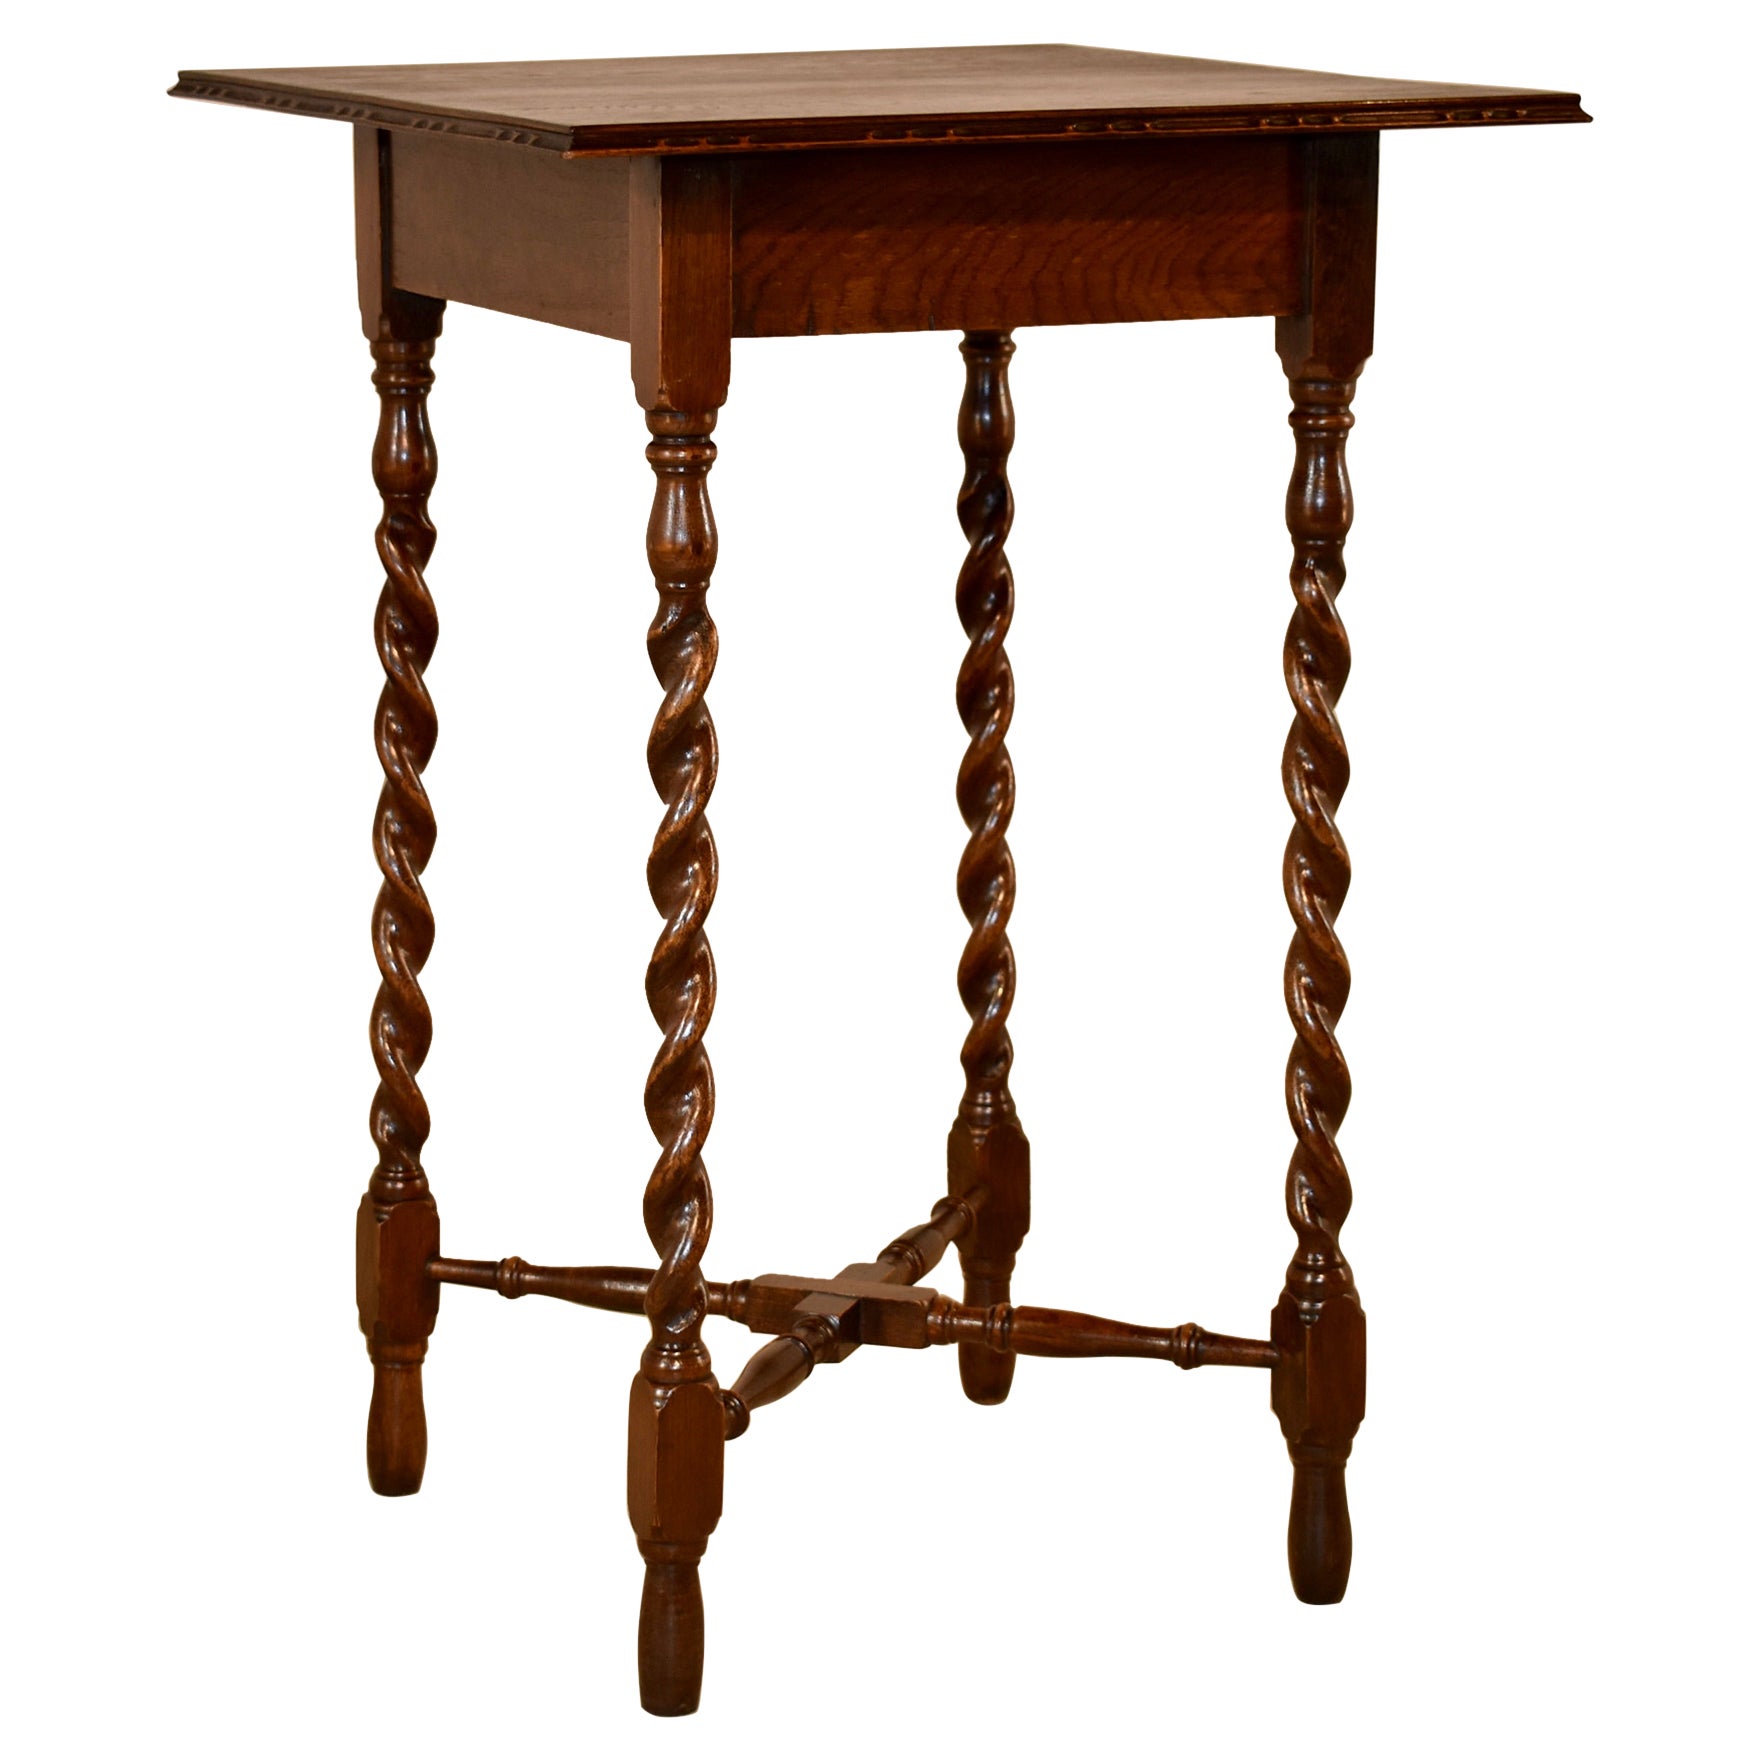 circa 1900 English Oak Side Table For Sale